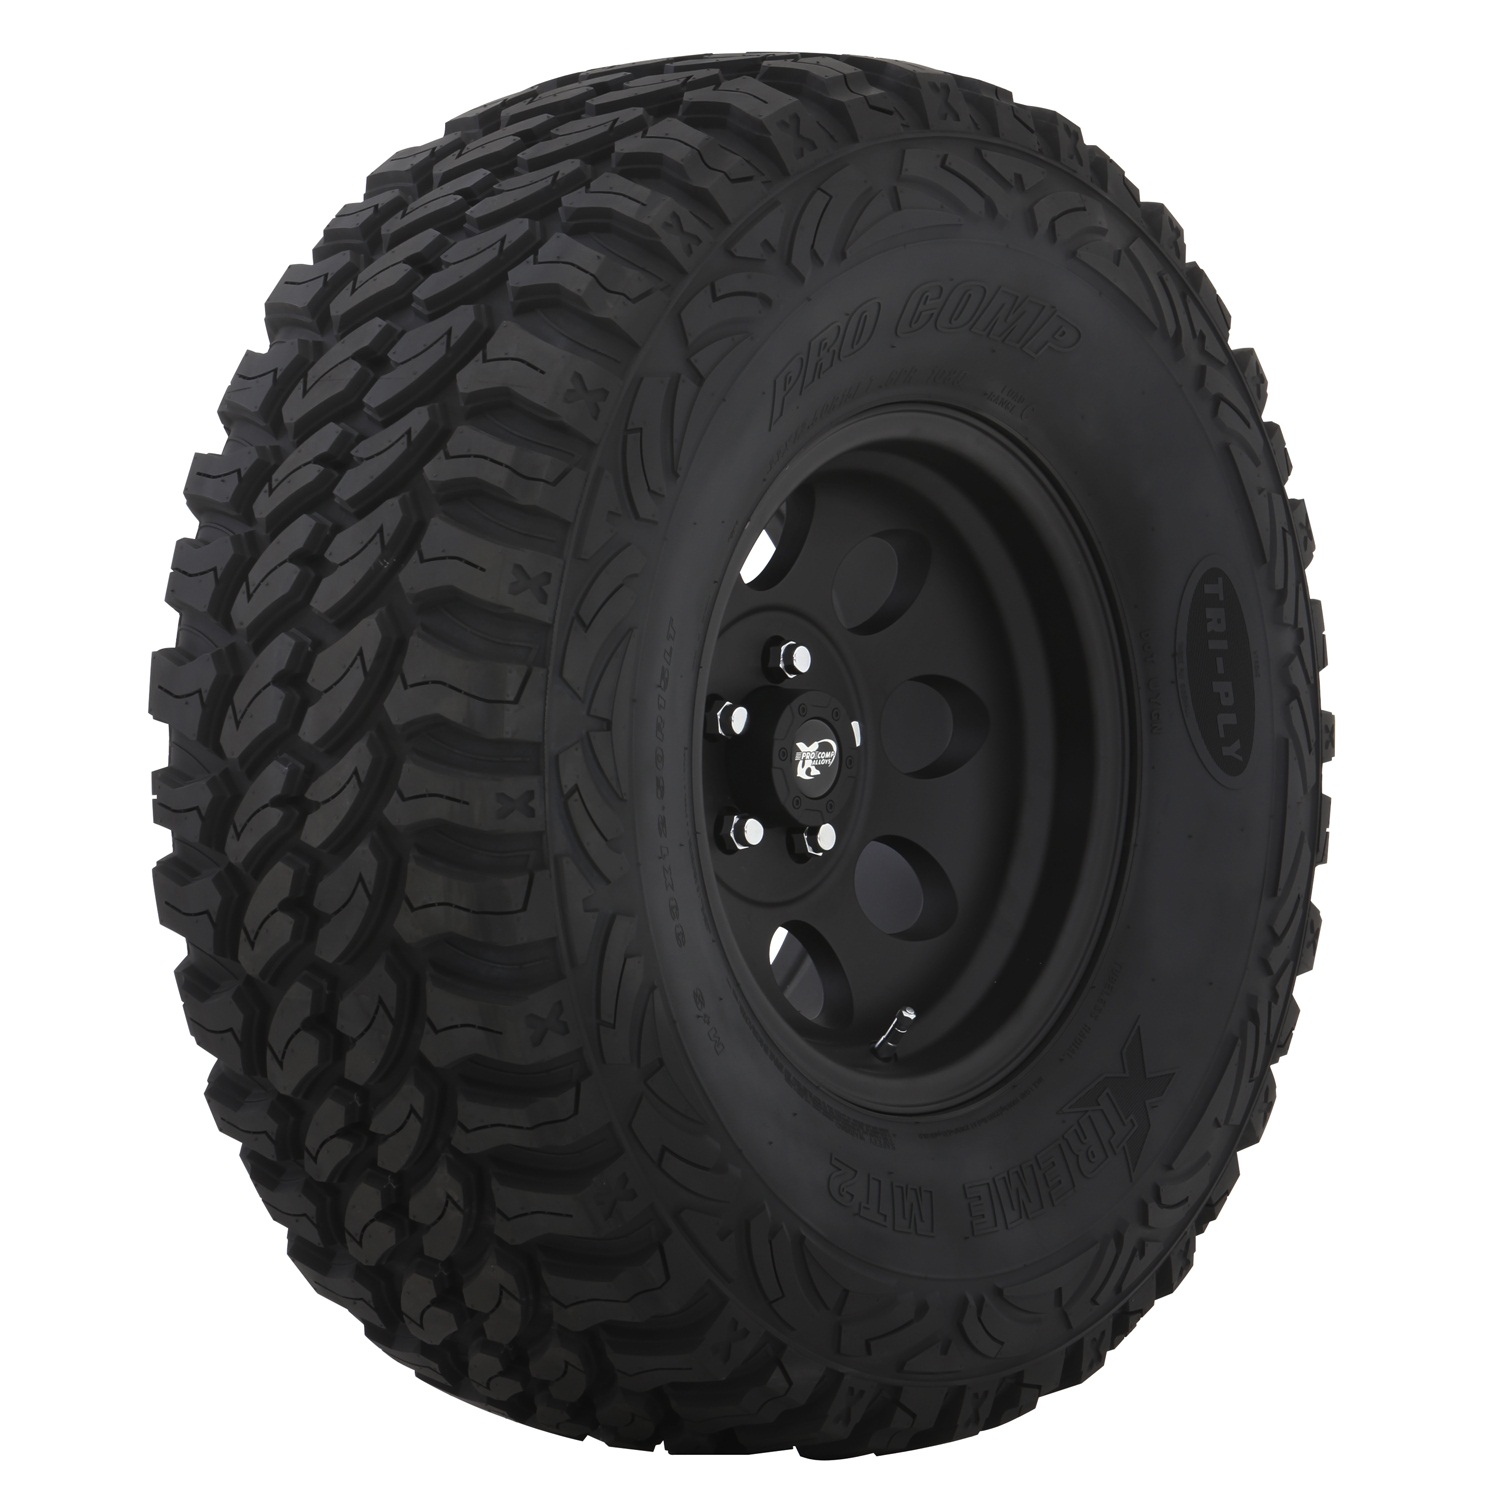 Pro Comp Tires Pro Comp Tires 771340 Pro Comp Xtreme Mud Terrain 2; Tire